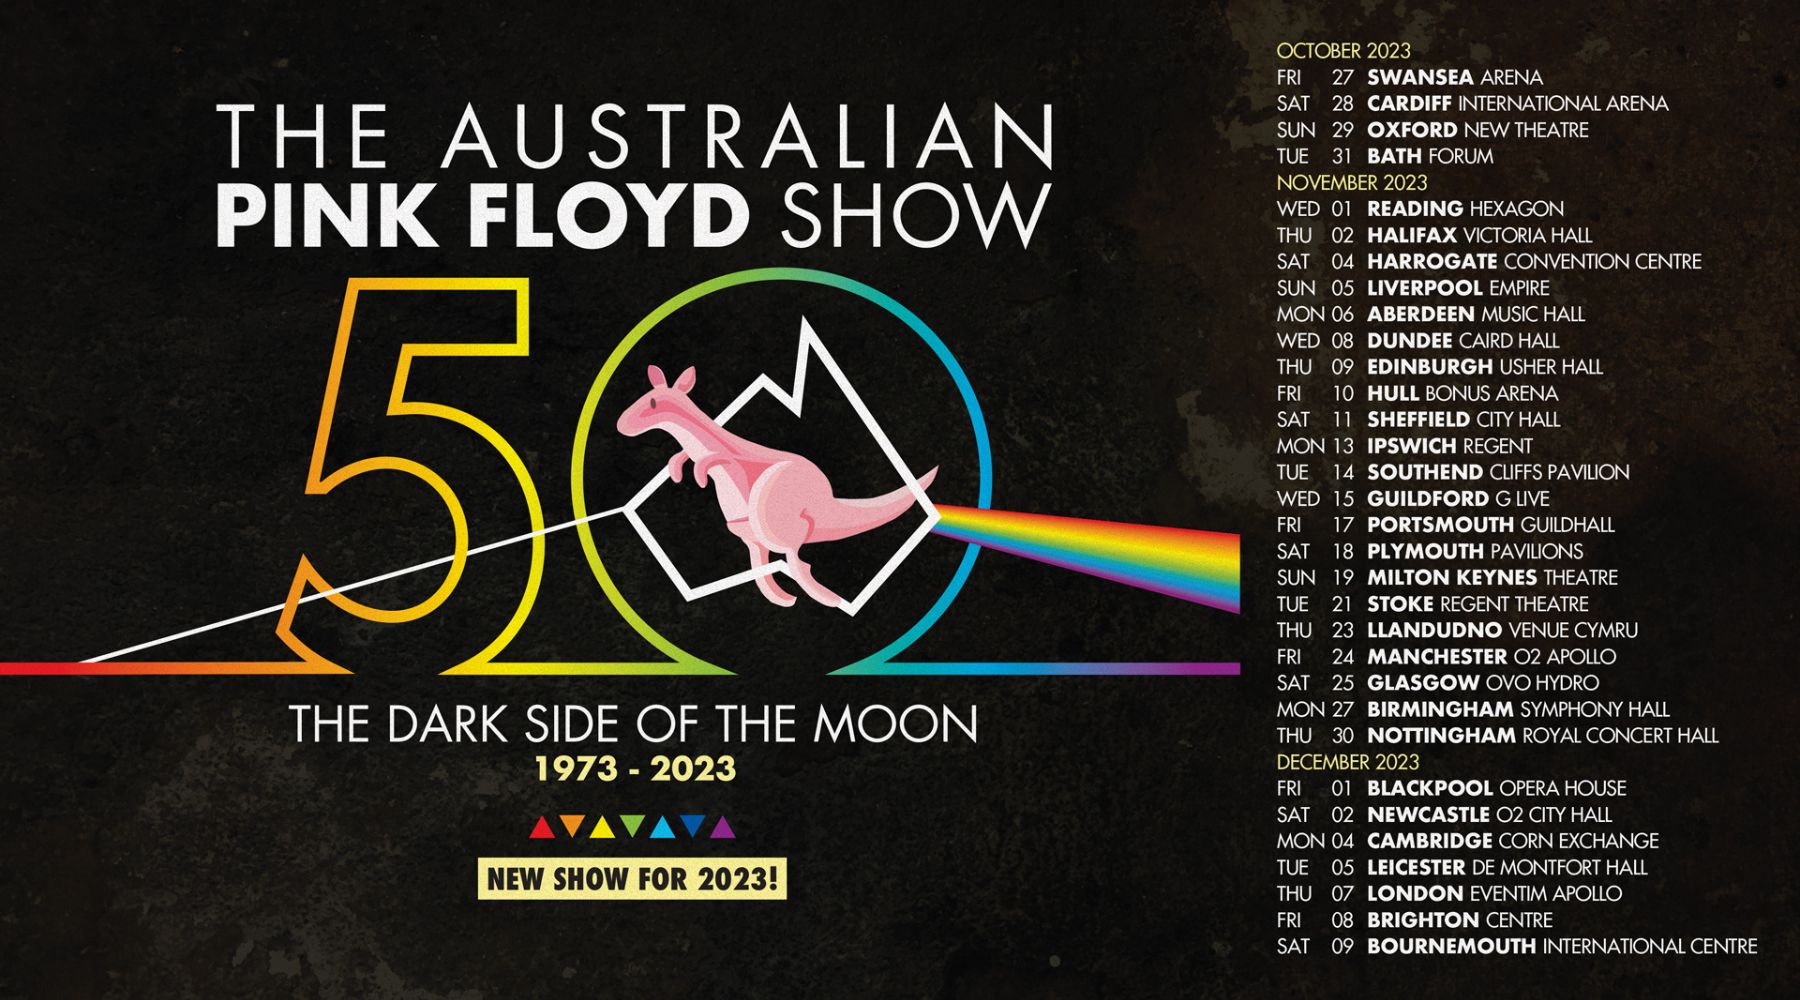 The Australian Pink Floyd Show Sheffield City Hall Saturday 11th